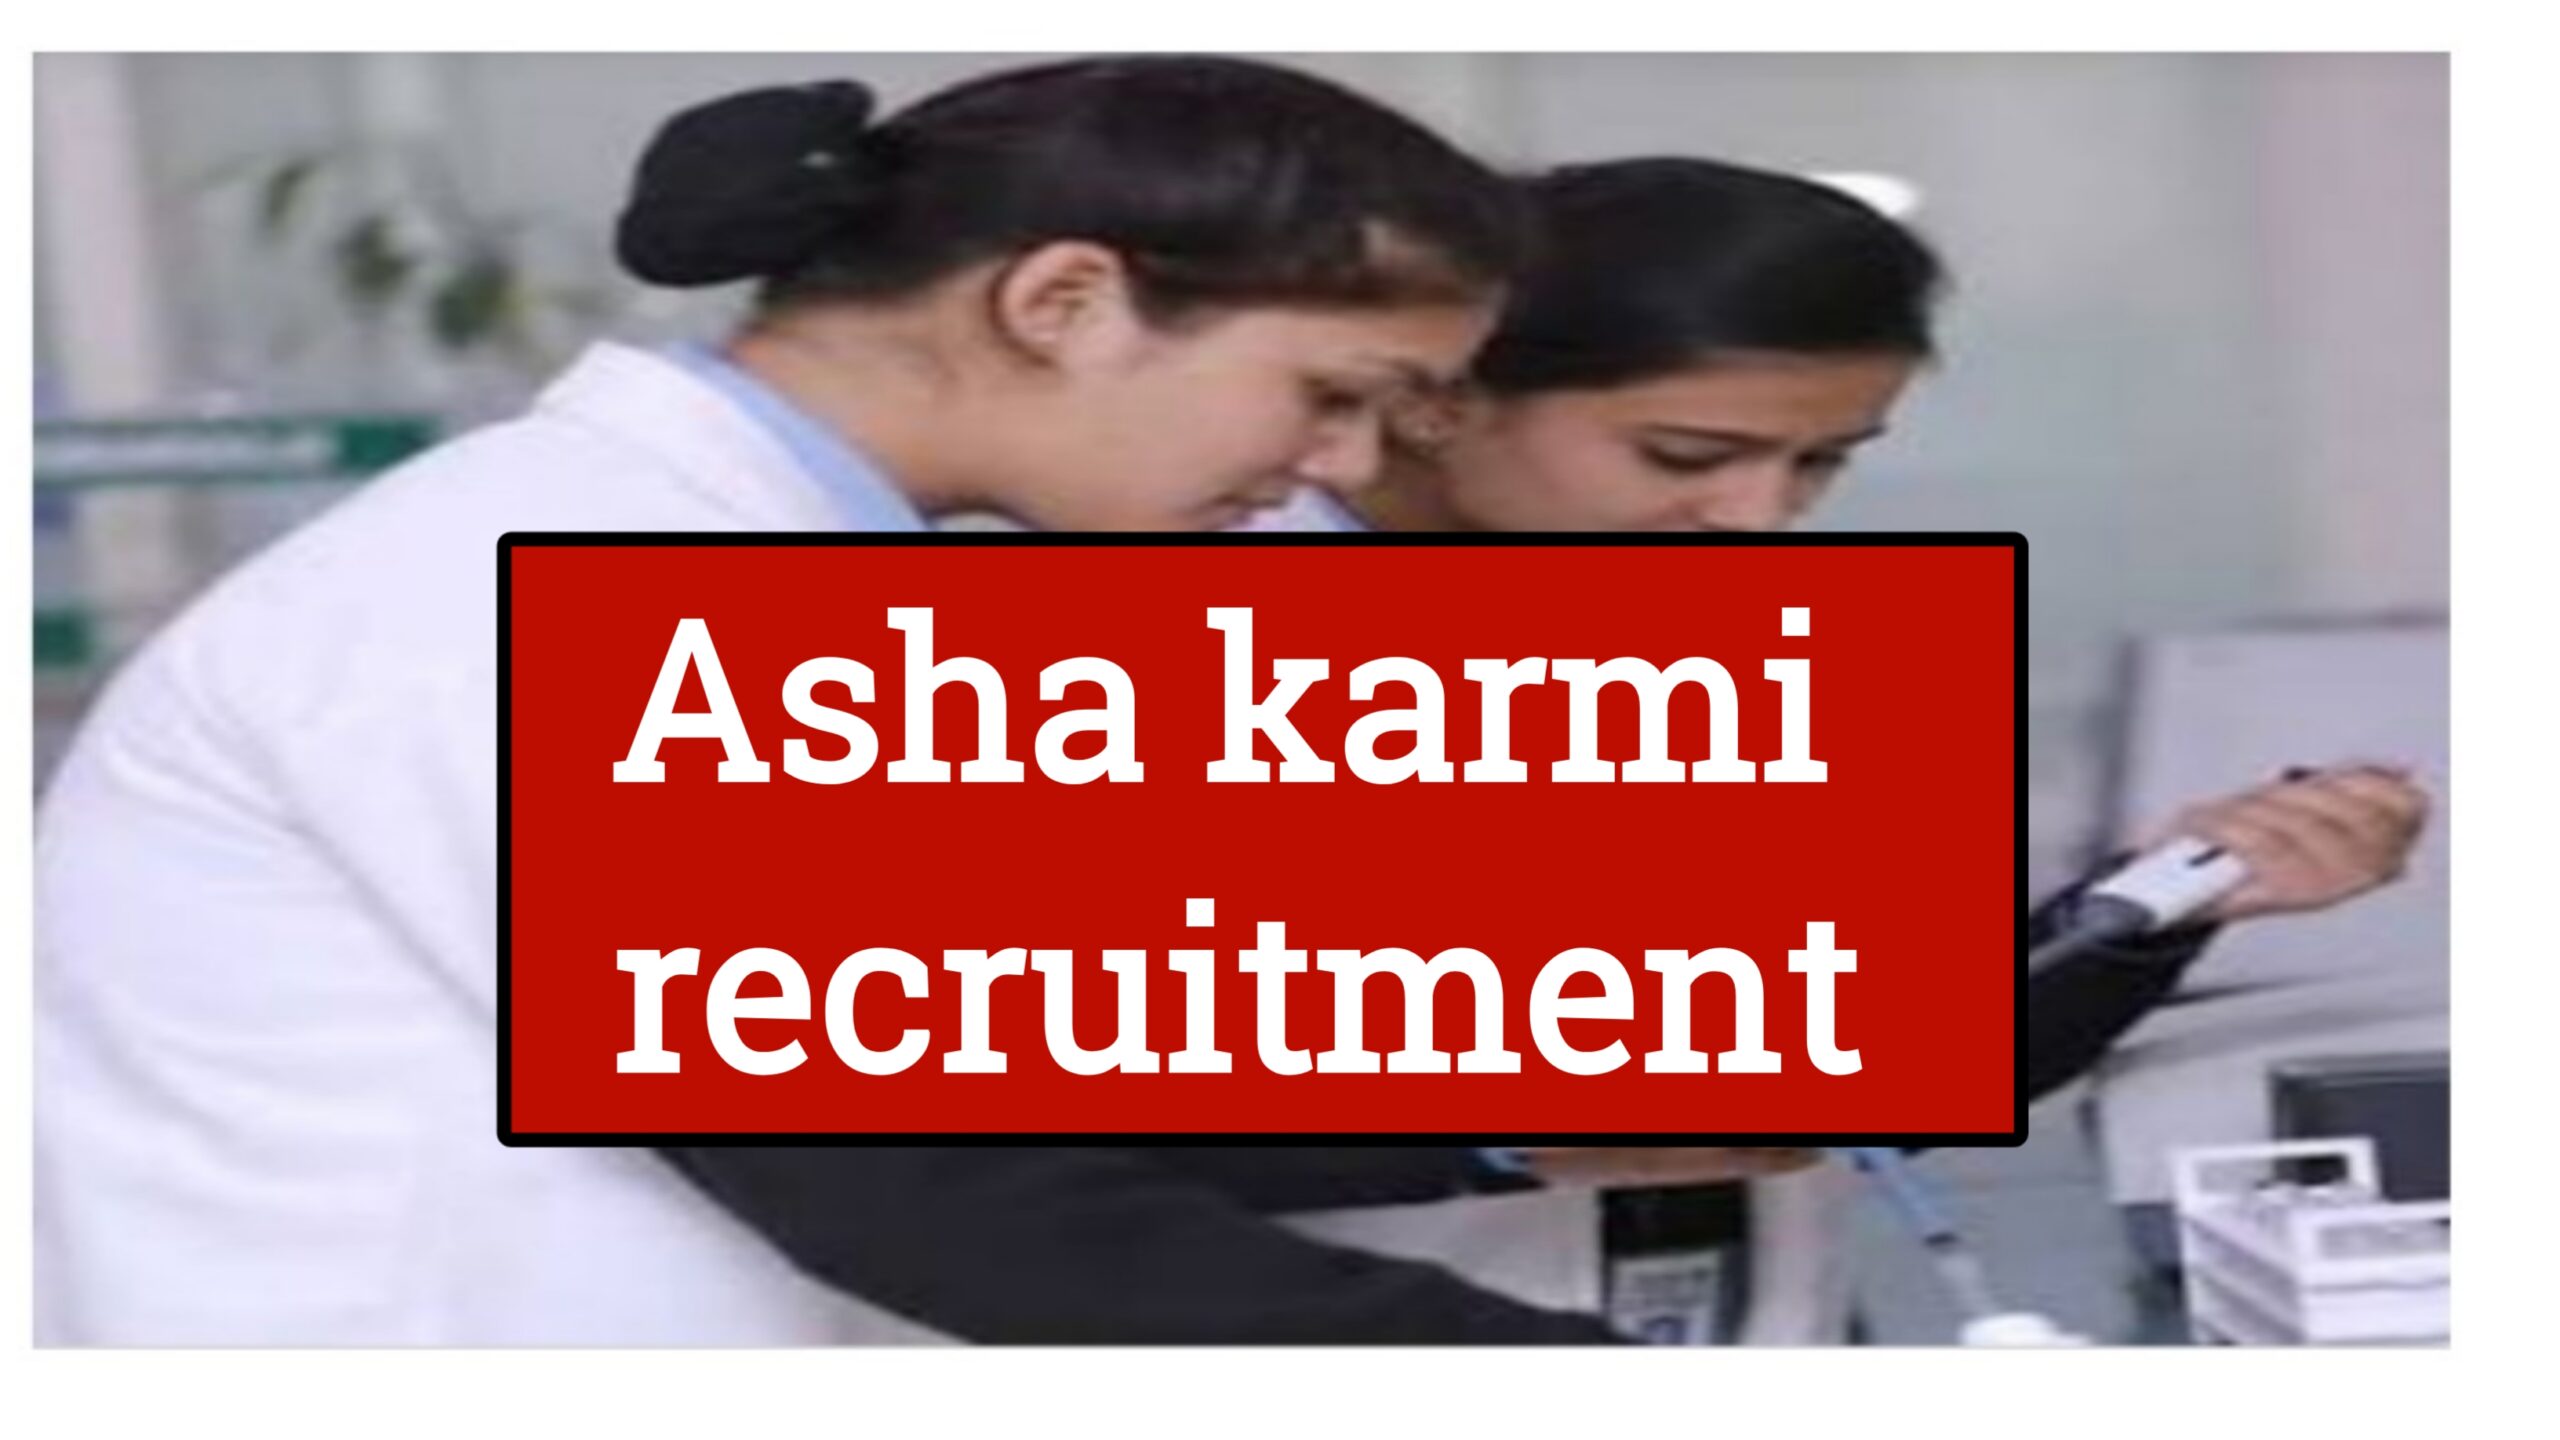 Asha karmi recruitment 2021